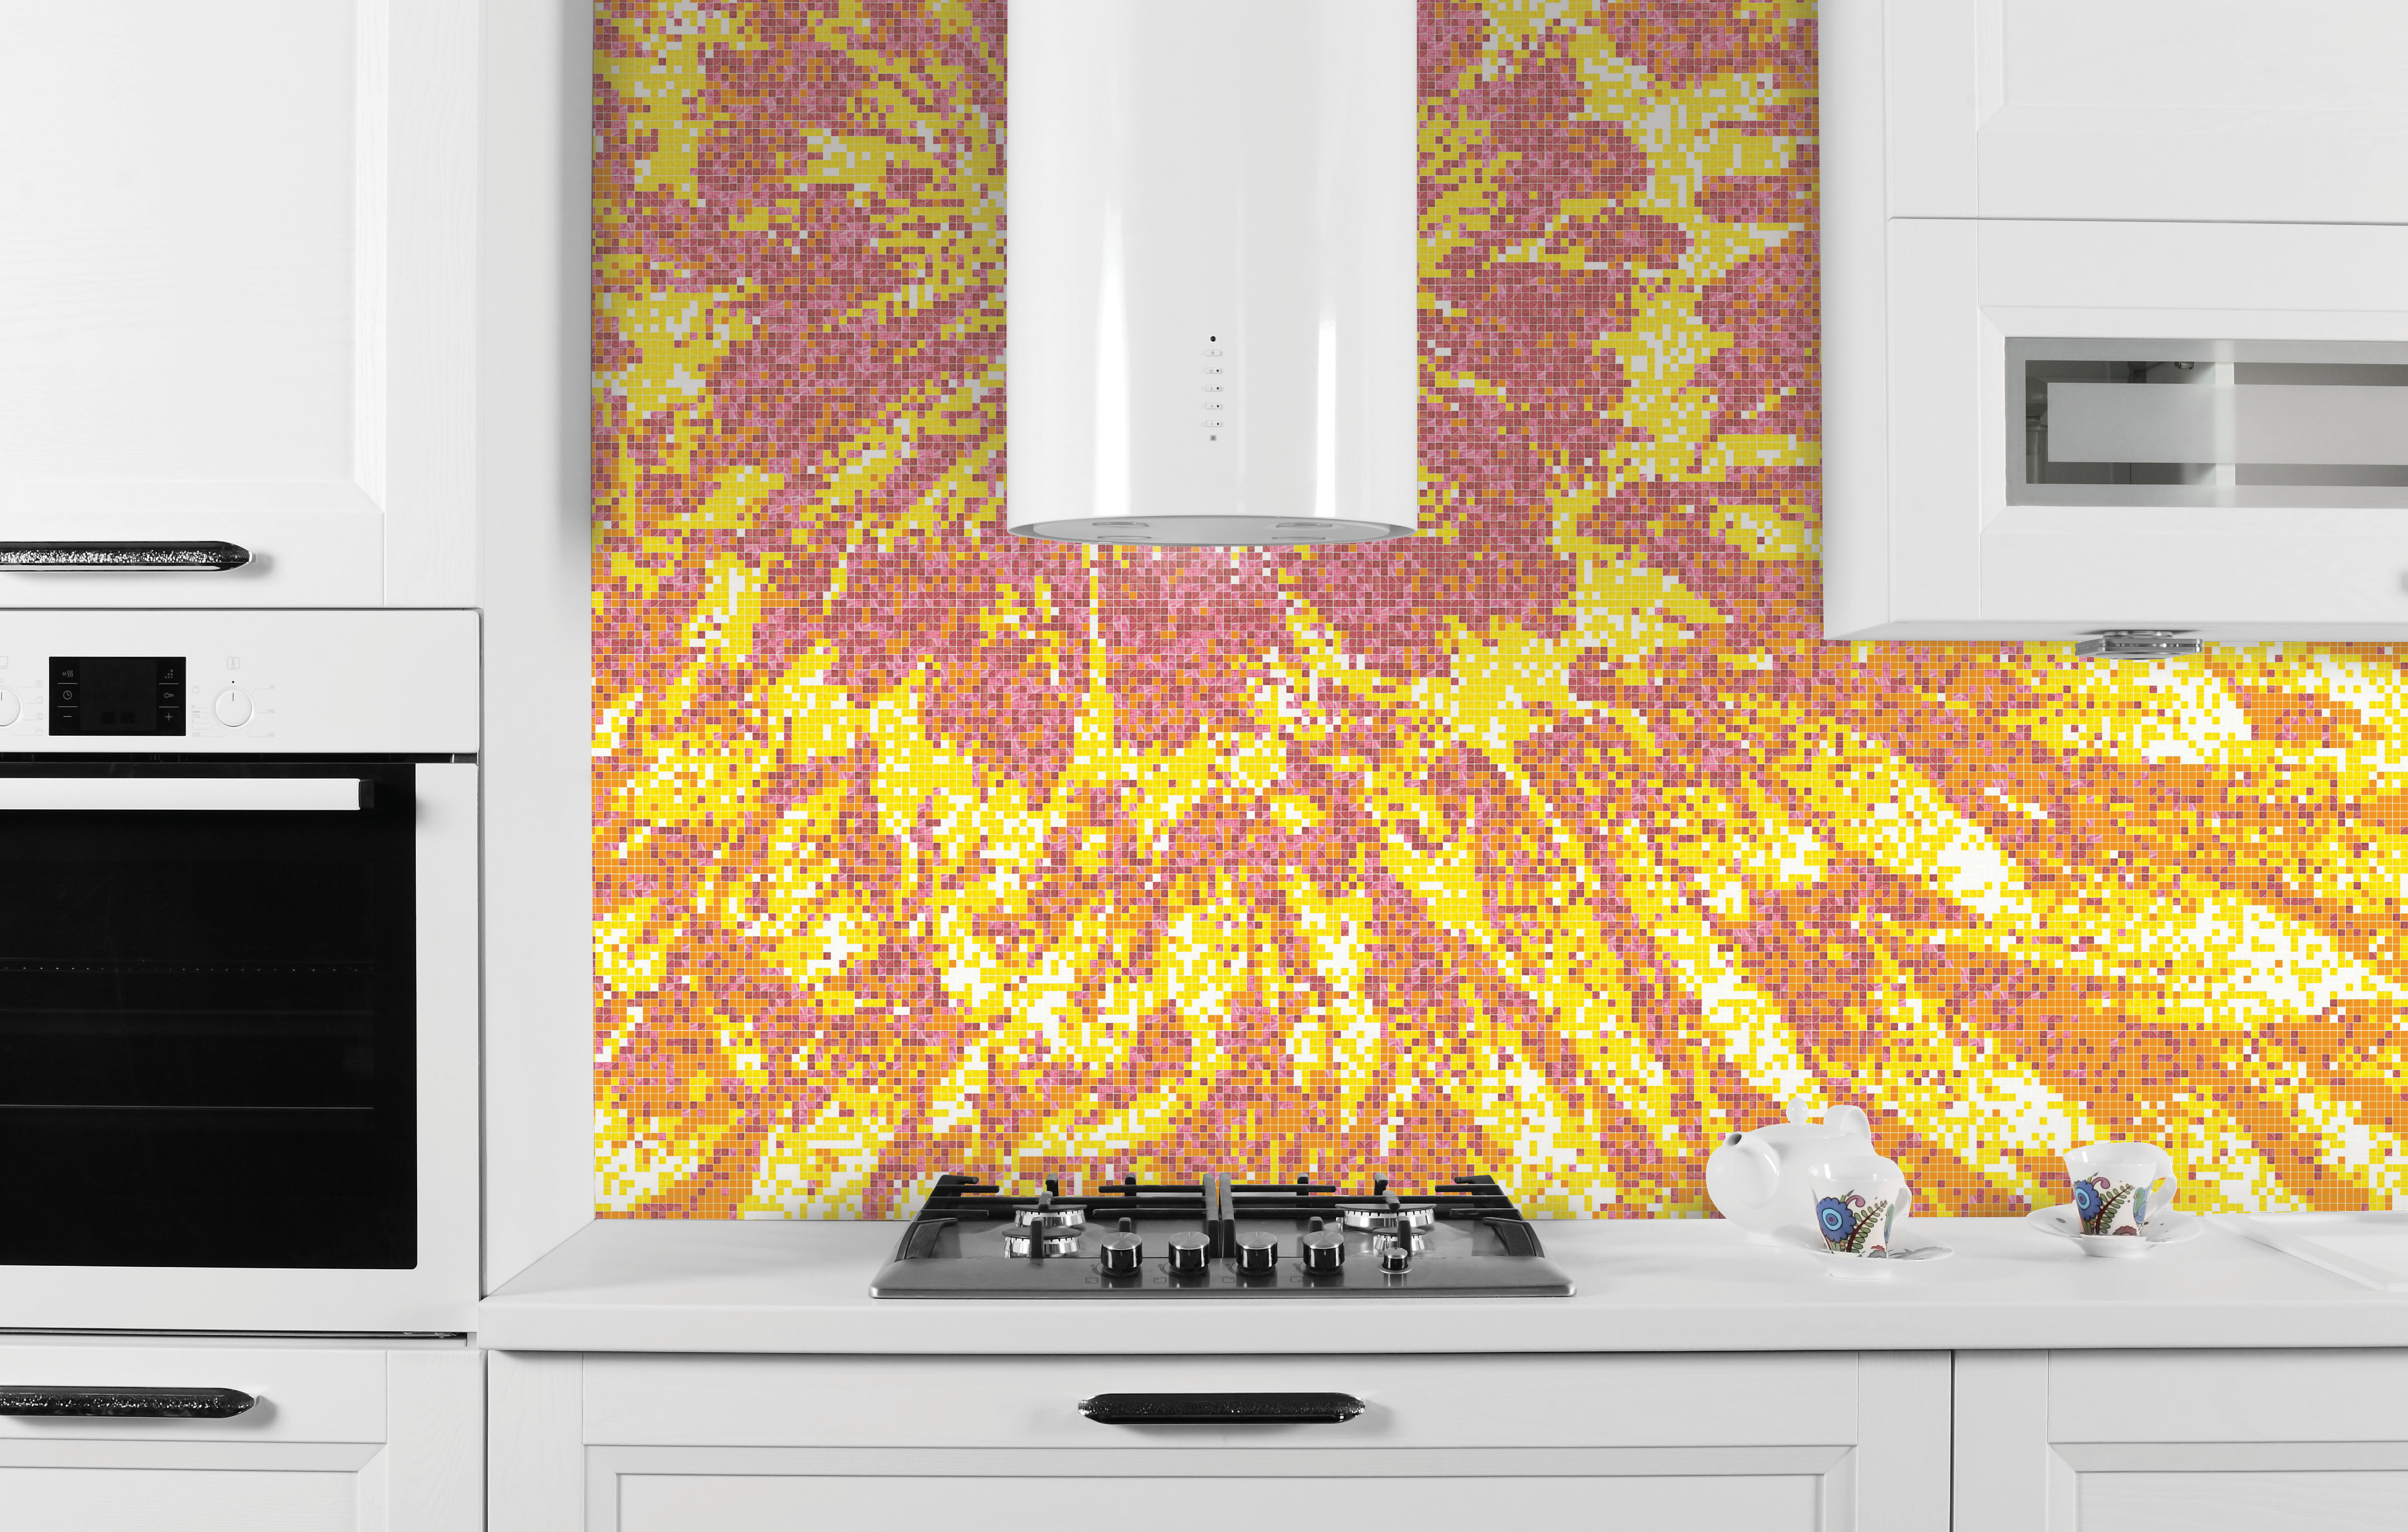 artaic-residential-kitchen-yellow-custom-mosaic-tile-mural-0400201